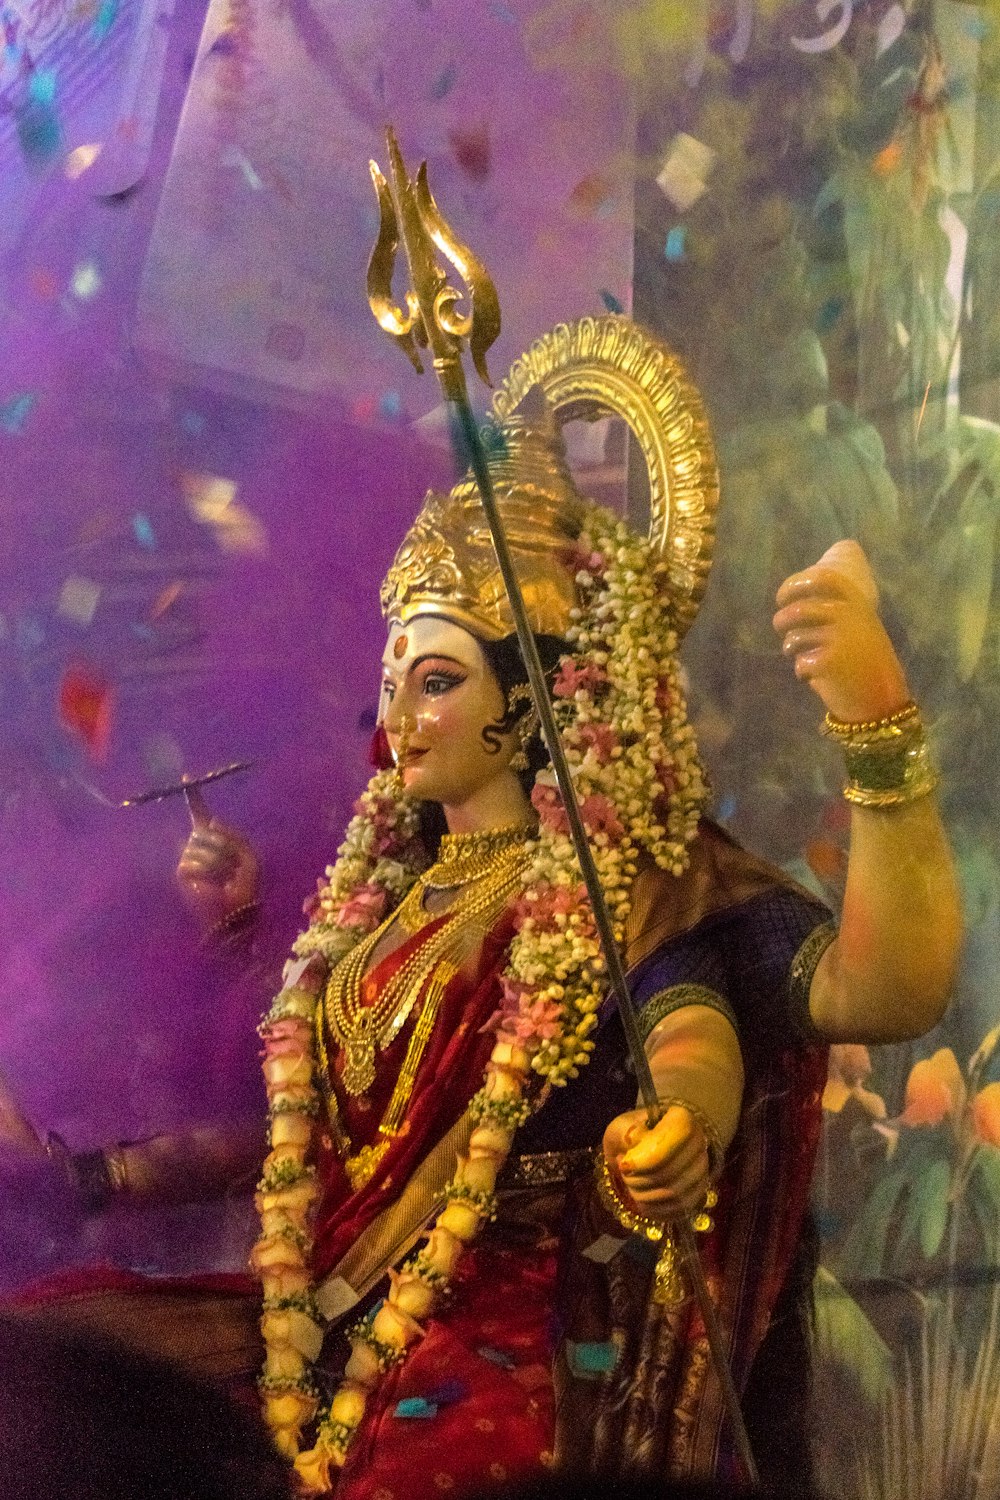 a statue of a hindu god holding a sword